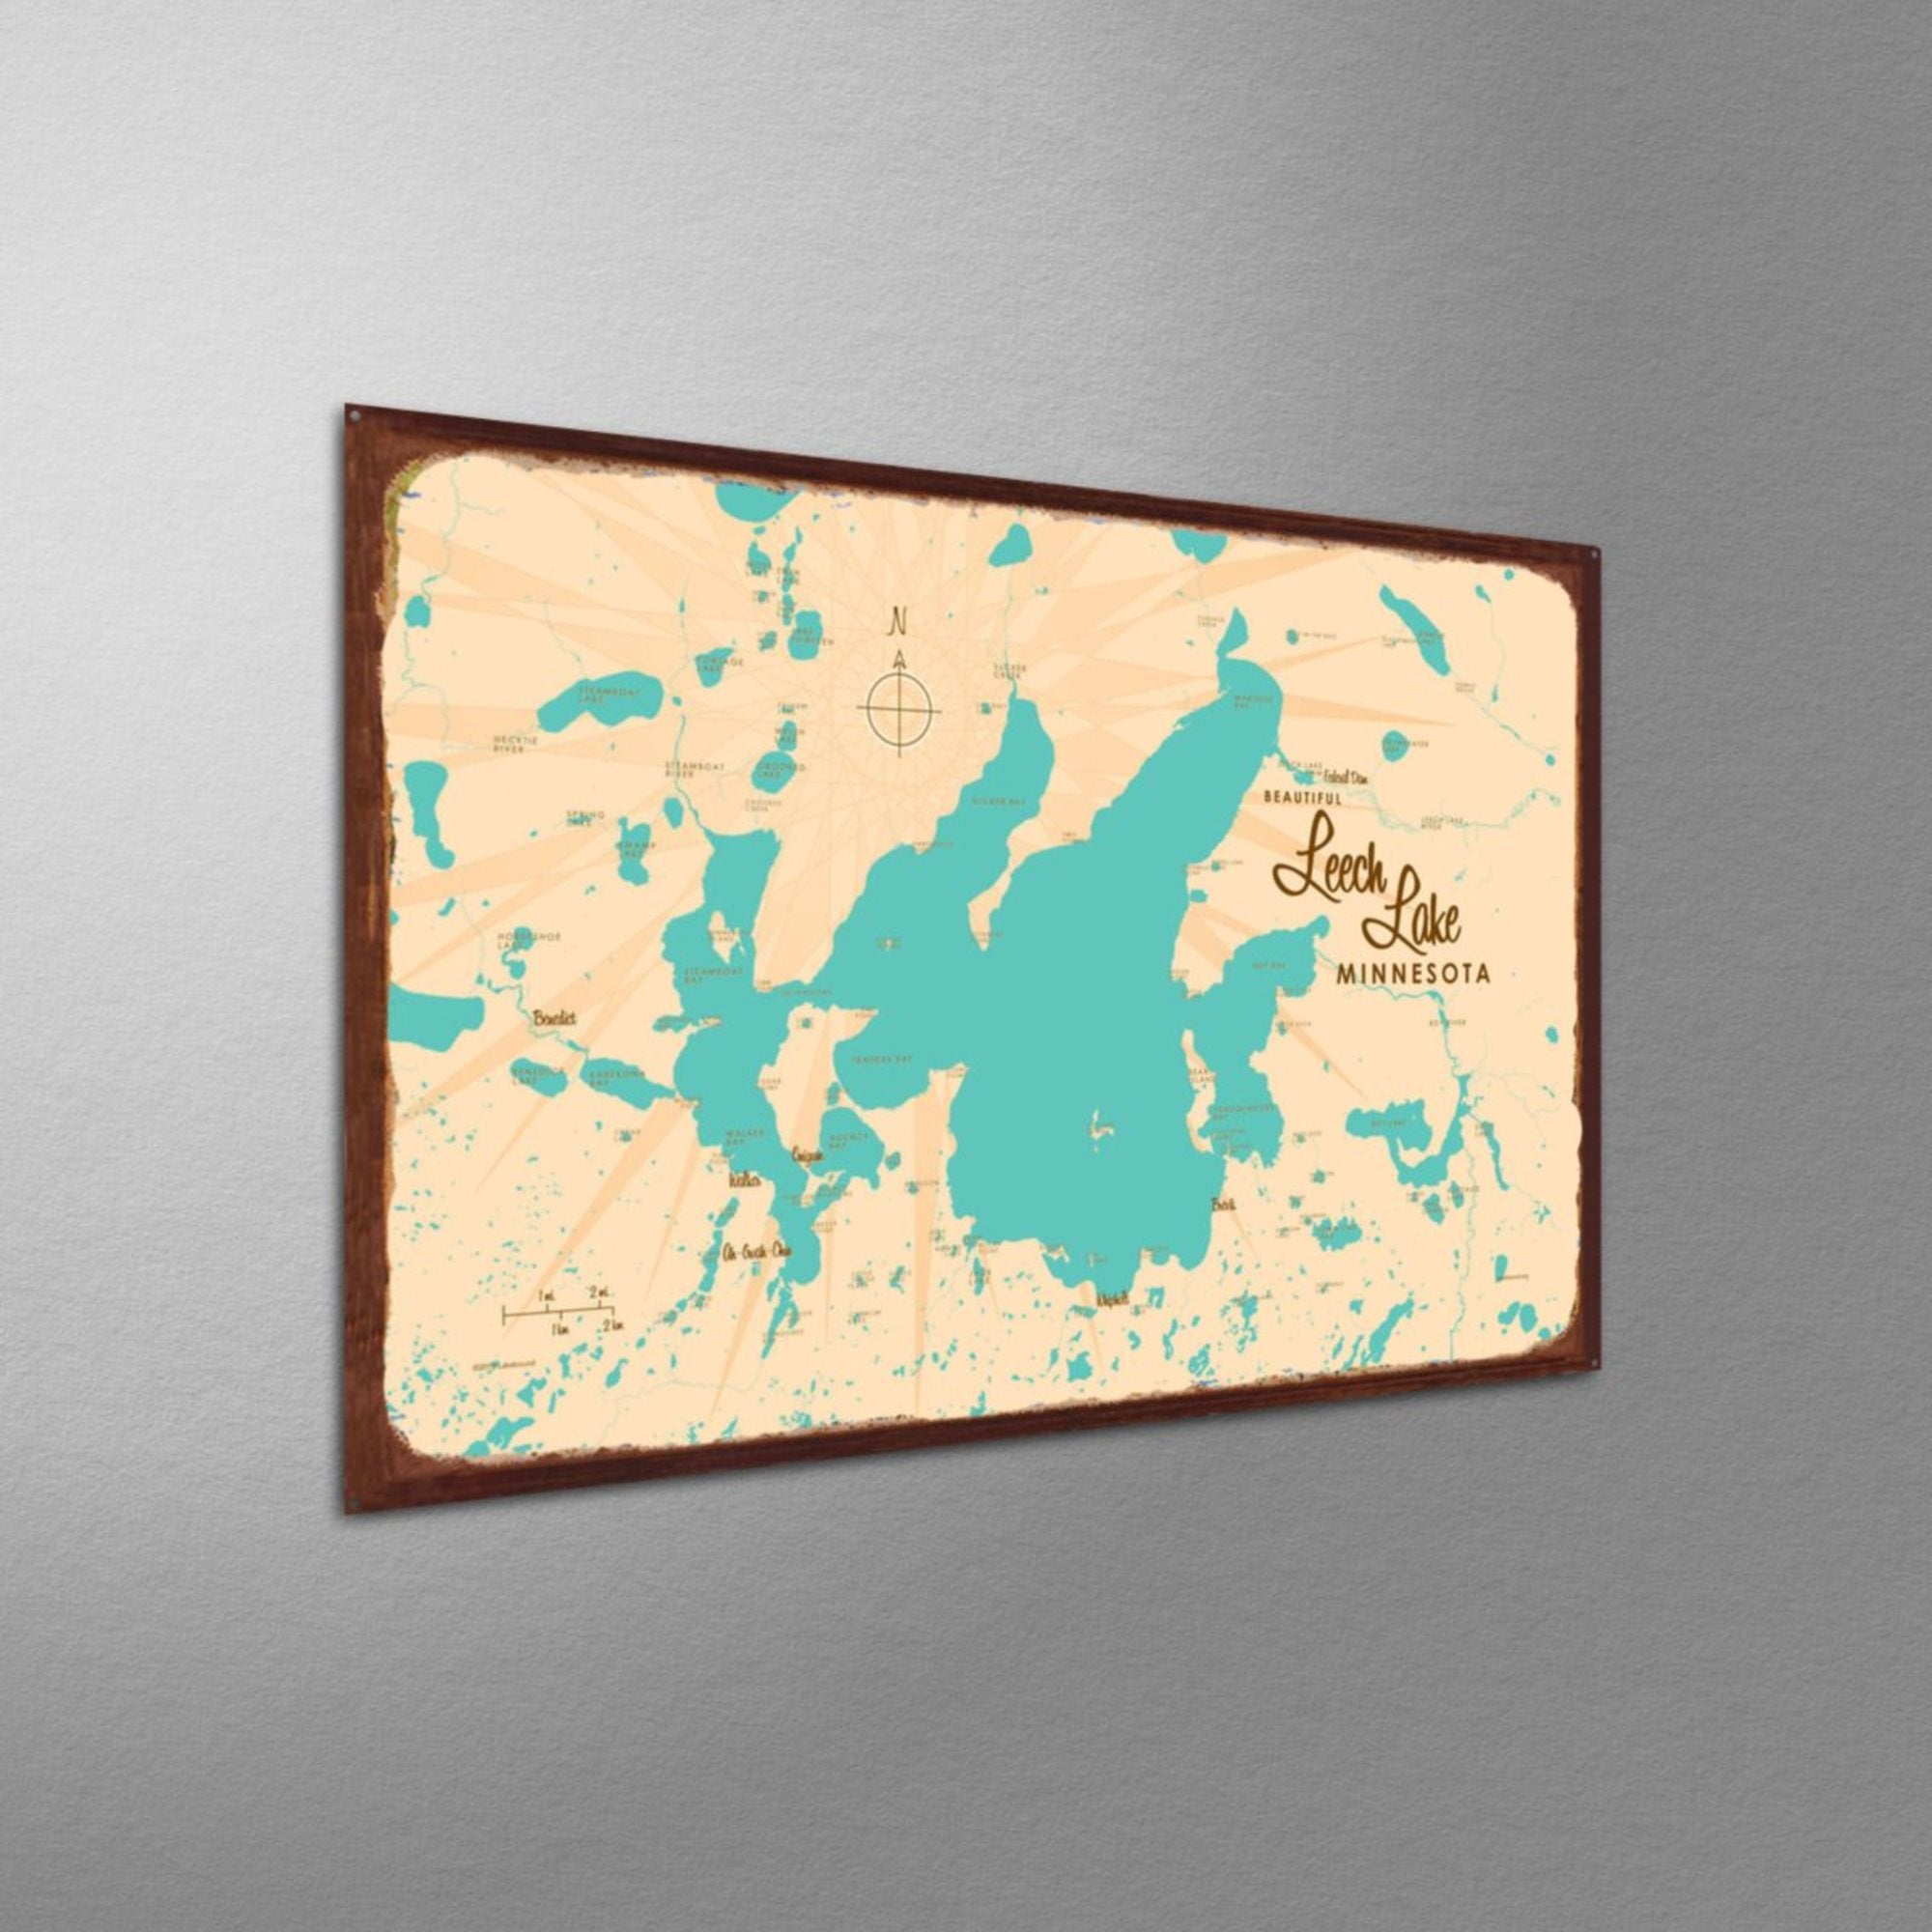 Leech Lake Minnesota, Rustic Metal Sign Map Art